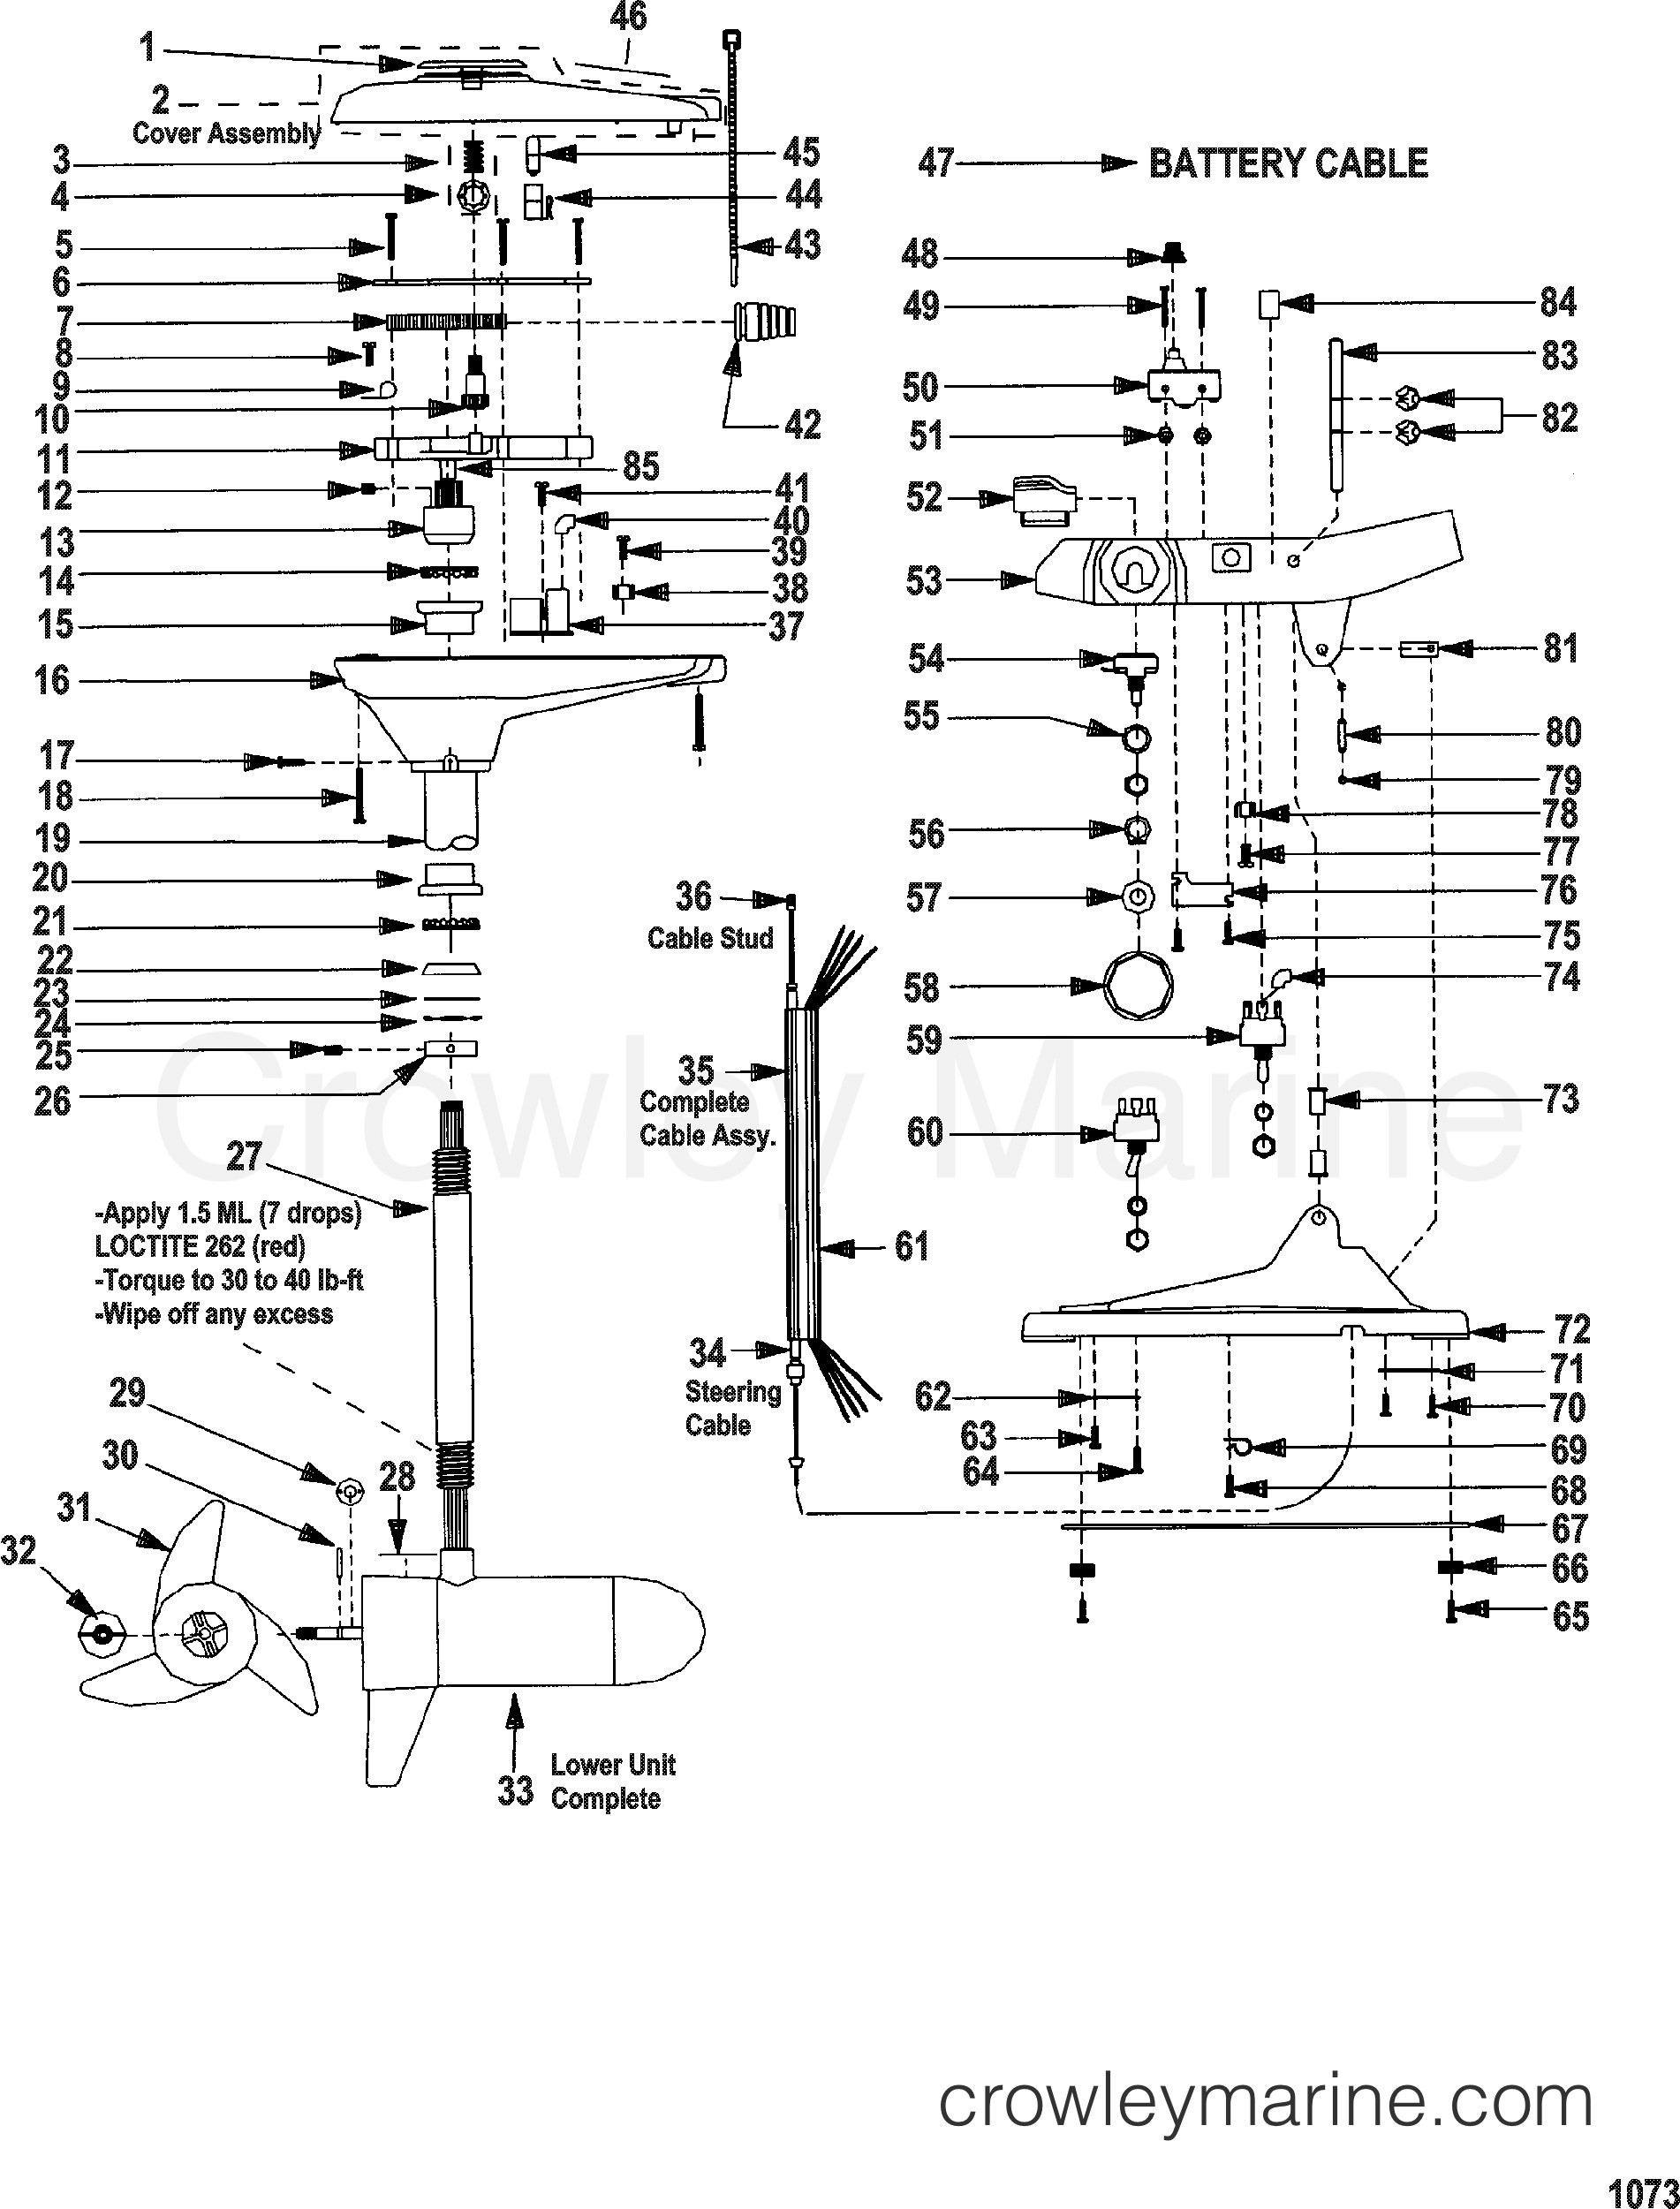 Motorguide Trolling Motor Wiring Diagram Lovely Figure Fo Control Logic Cca A3 Schematic Diagram Sheet Motor A2